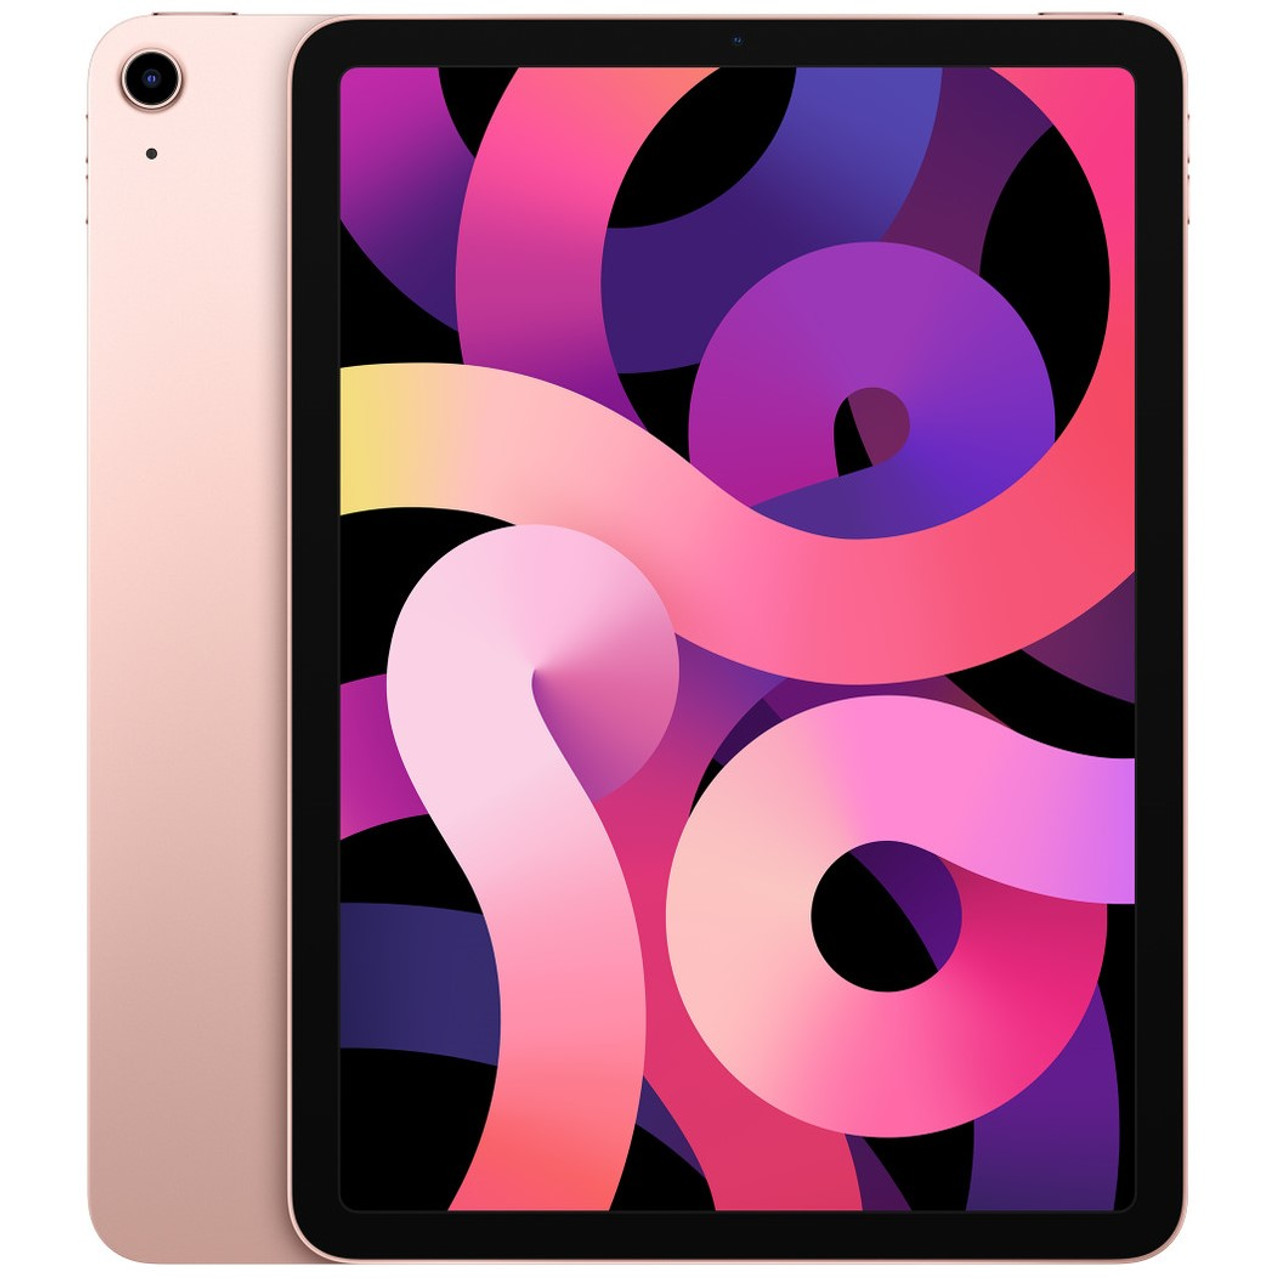 Apple iPad Air 4th Gen MYFP2LL/A - 64 GB, WiFi, Rose Gold - New